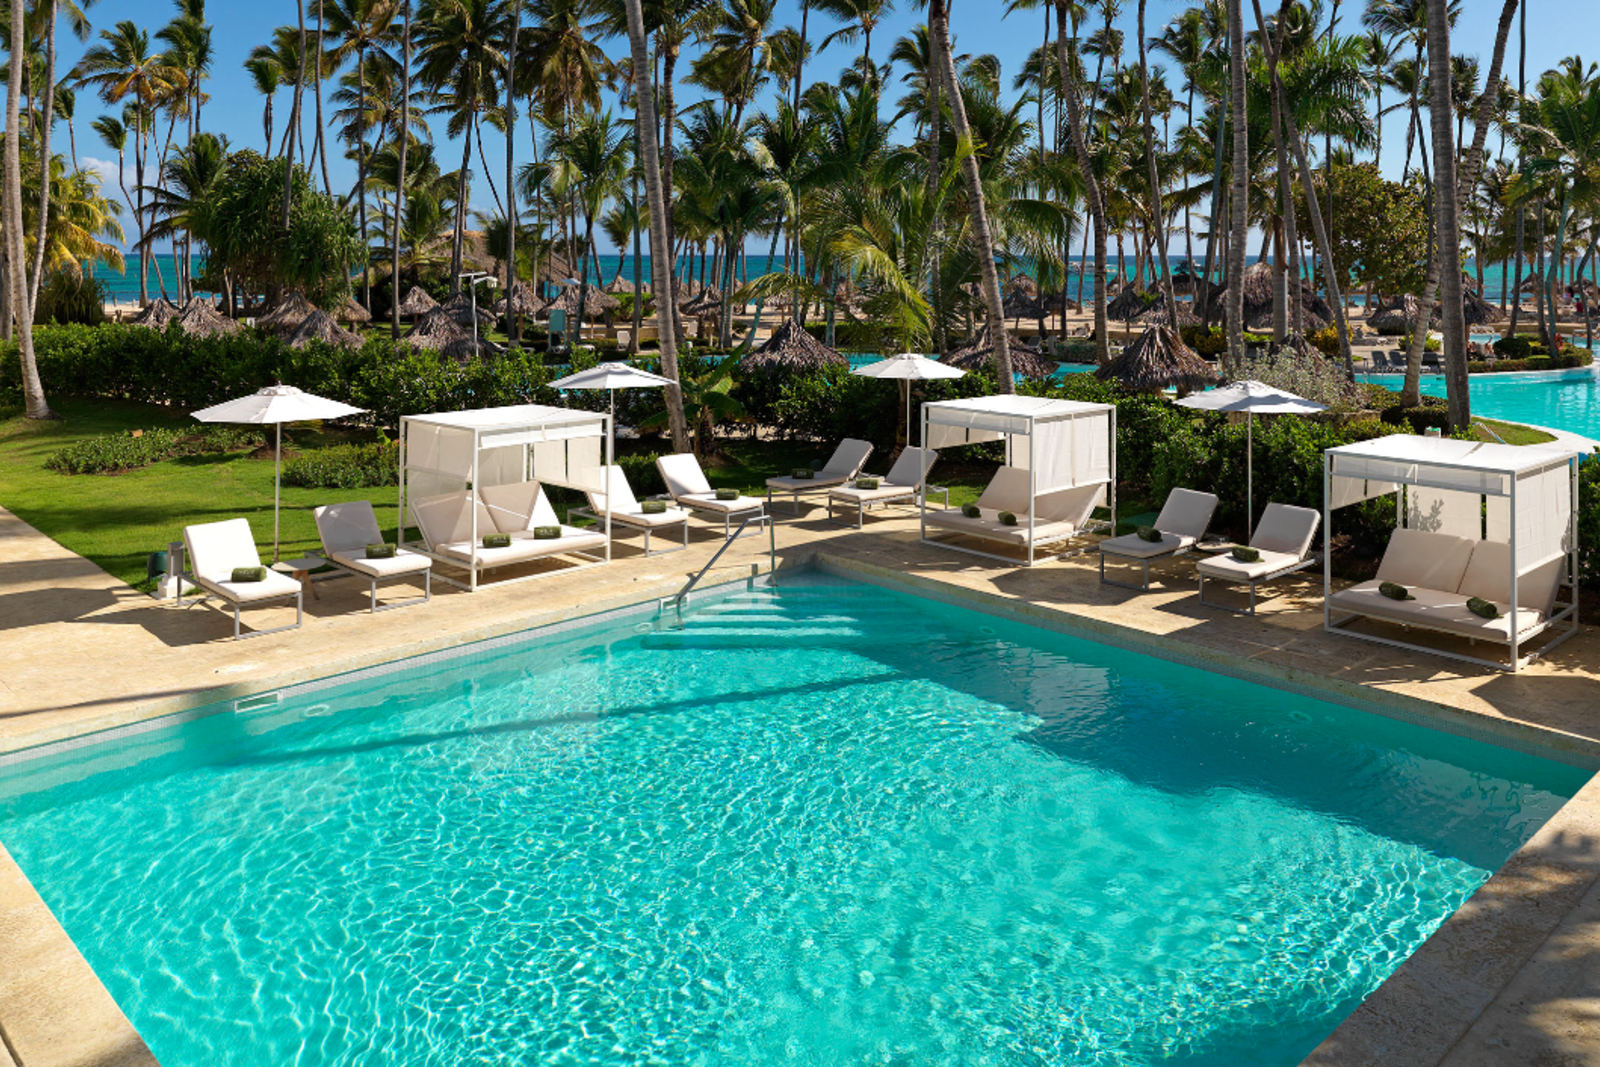 The pool area at Meliá Punta Cana Beach Resort